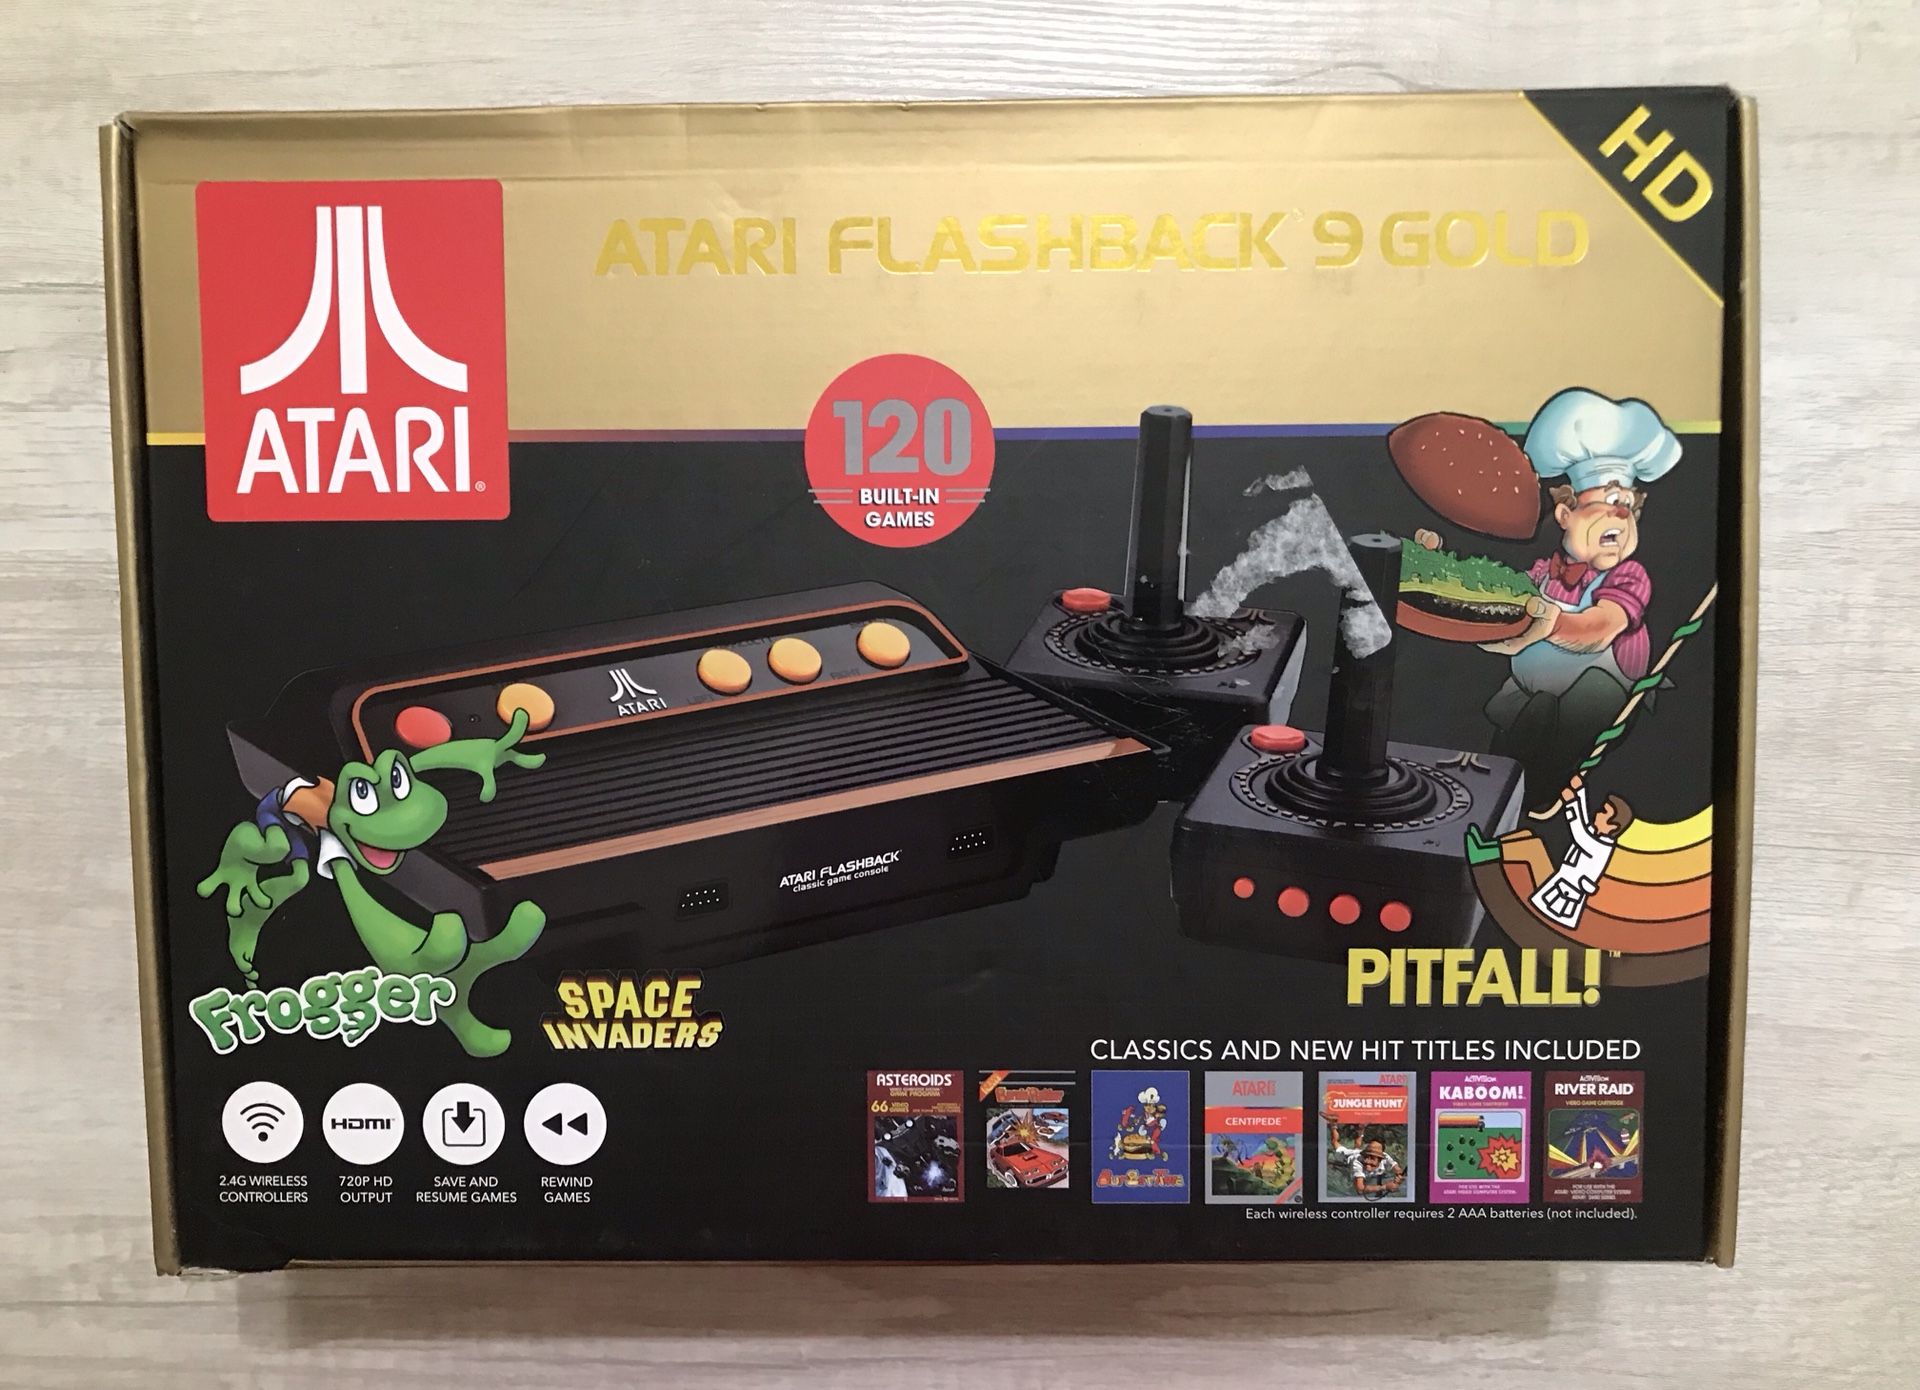 Atari flashback 9 gold